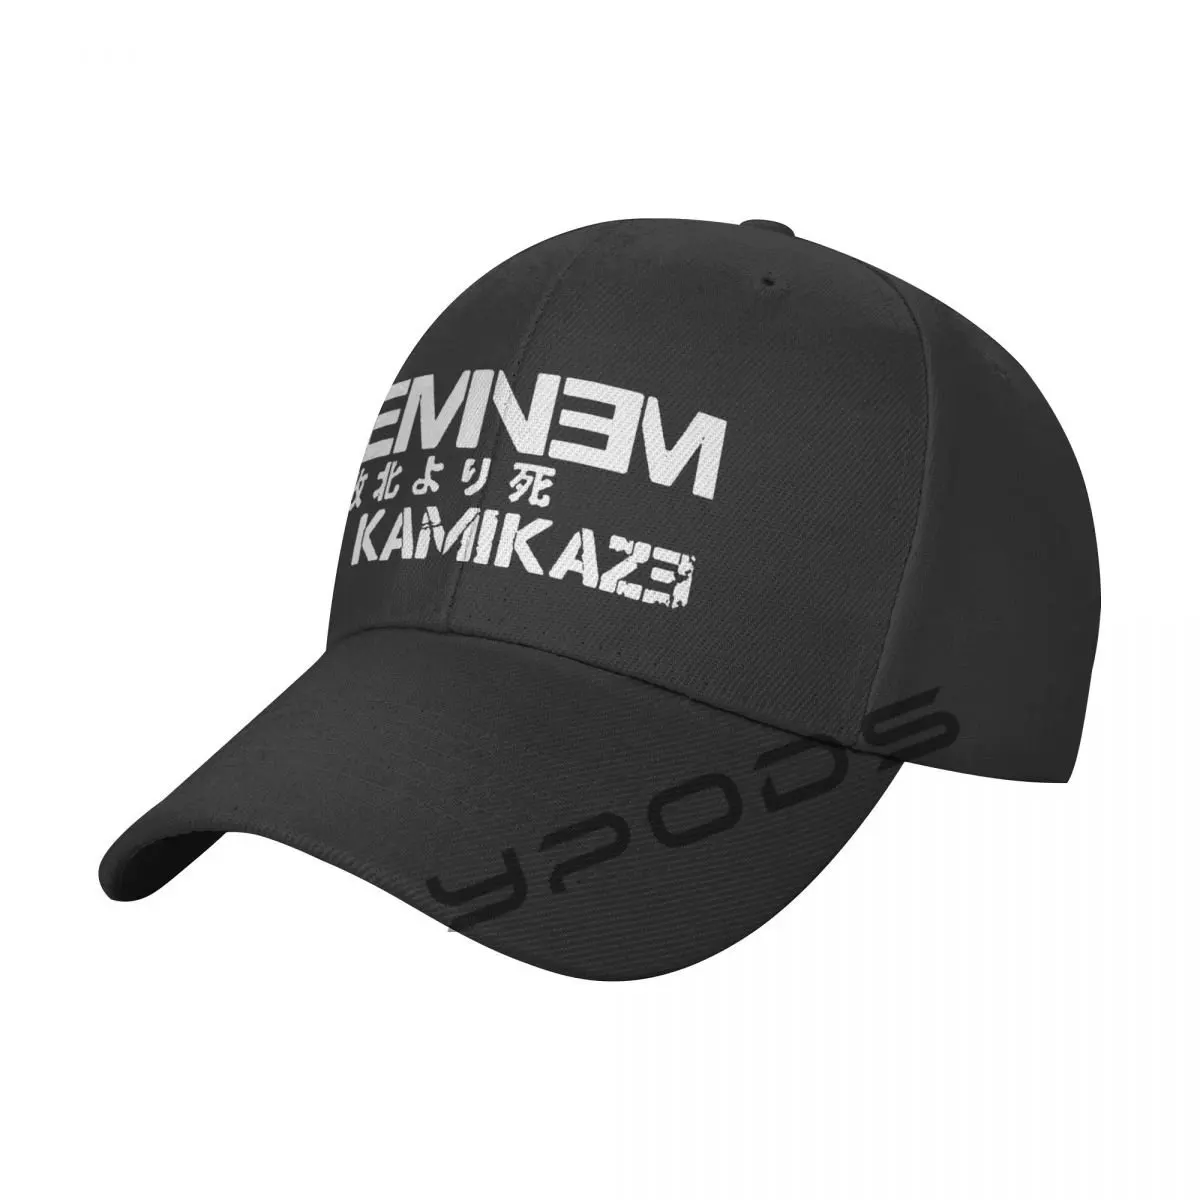 Eminem Kamikaze Casual Baseball Cap for Women and Men Fashion Hat Hard Top Caps Snapback Hat Unisex